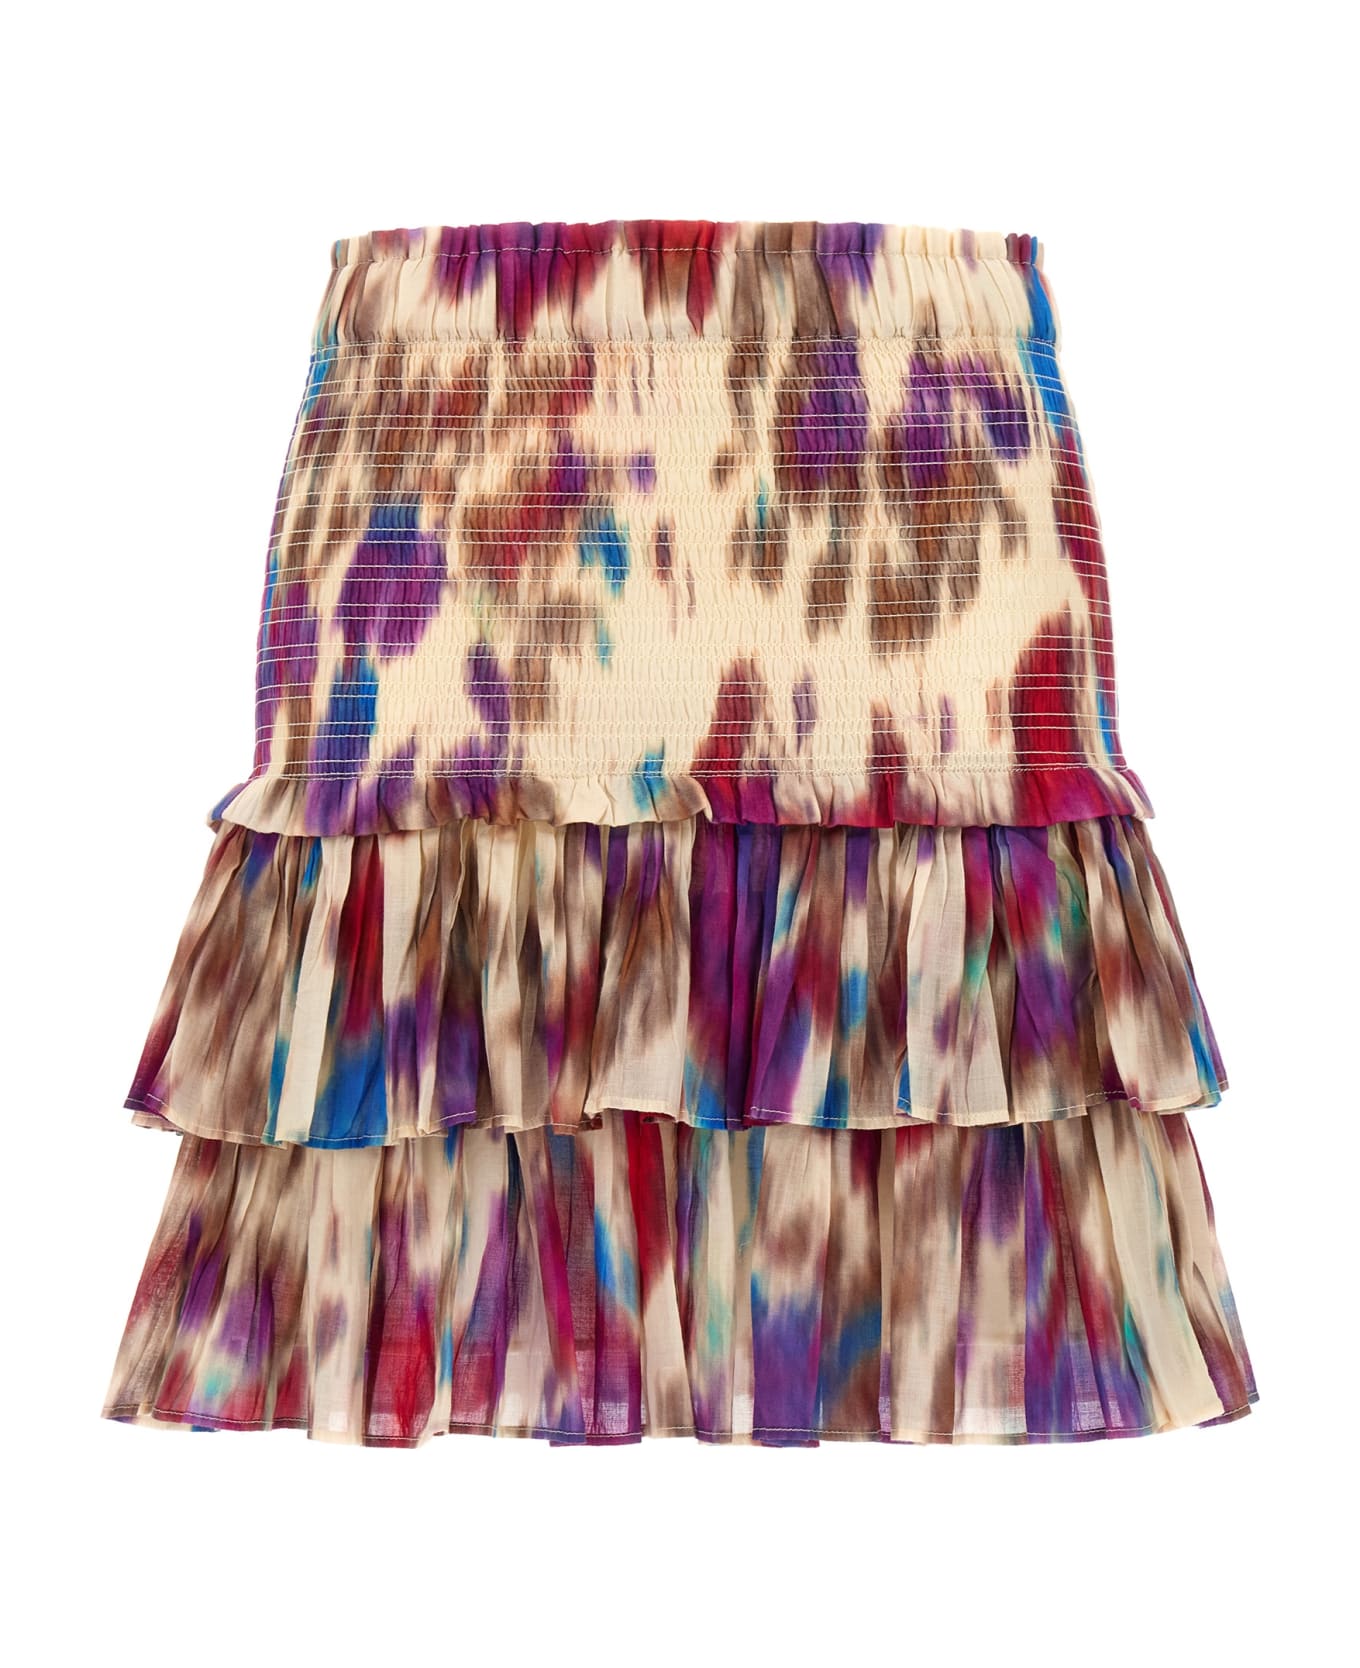 Marant Étoile 'naomi' Skirt - Multicolor スカート